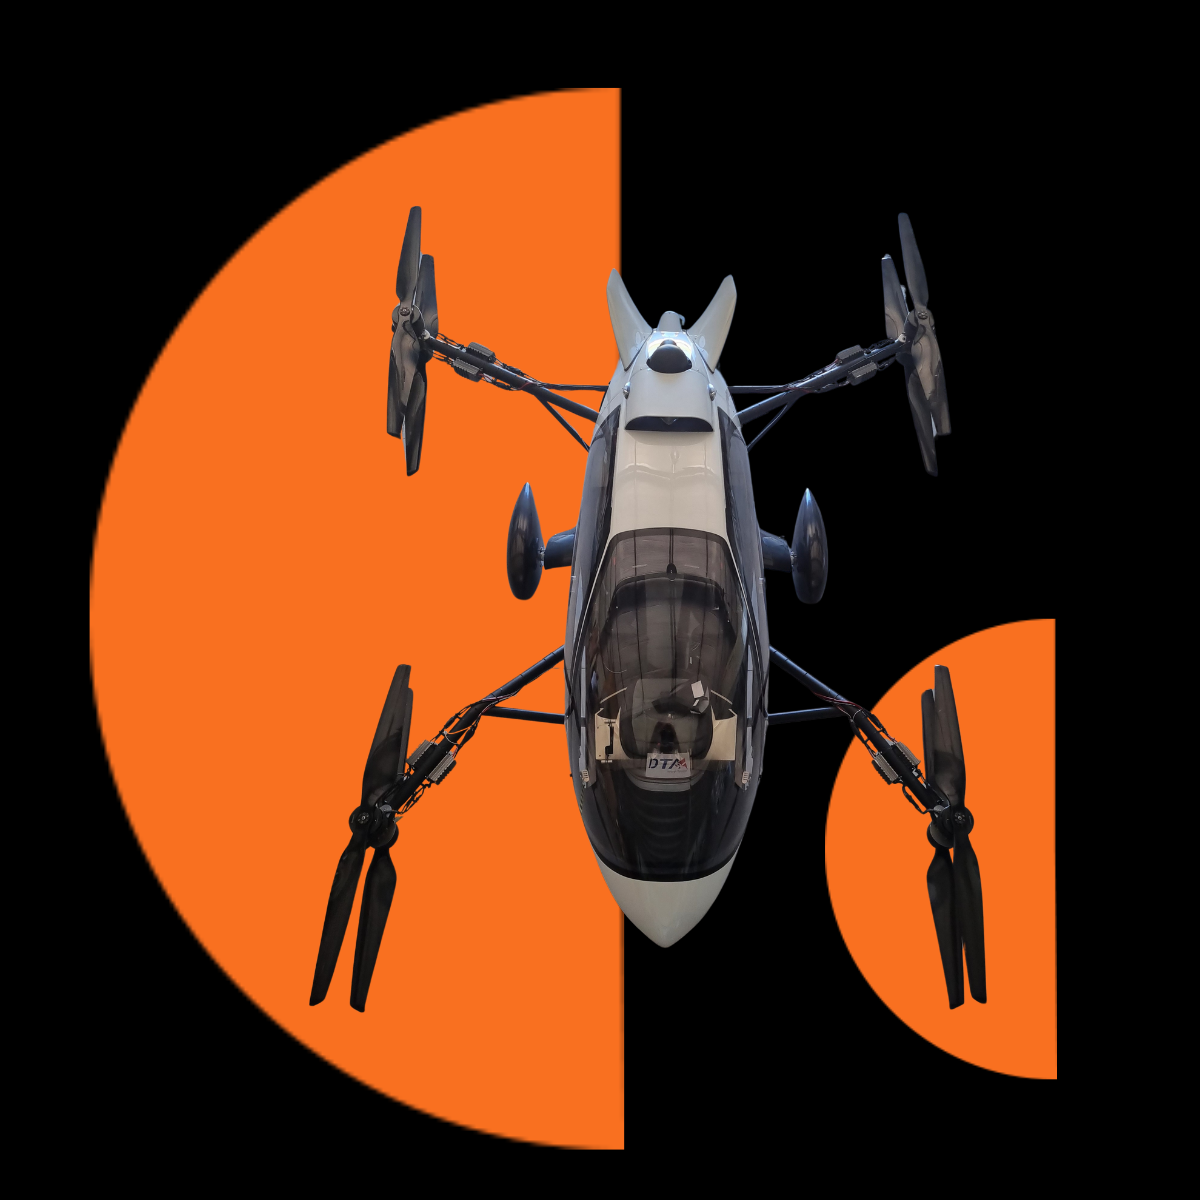 Hélicoptère lumineux - Technologie Services